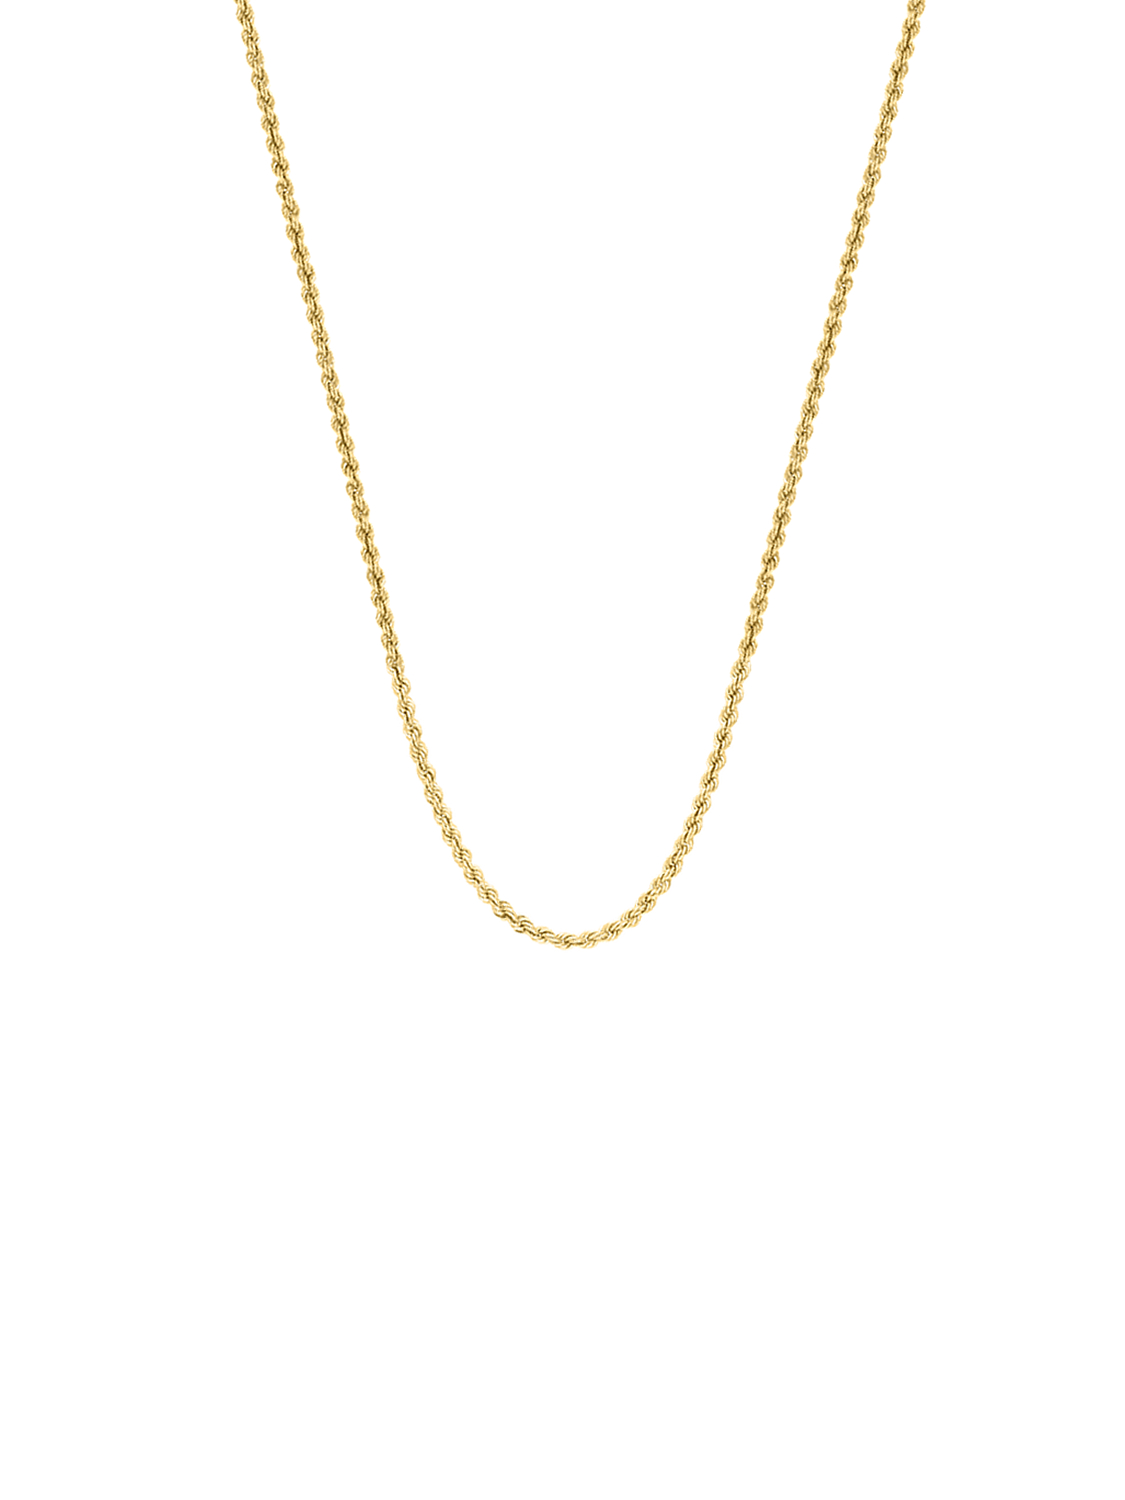 Dalmatia - Halskette 333 Gold Federring - Breite 1,4 mm - Länge 40 cm